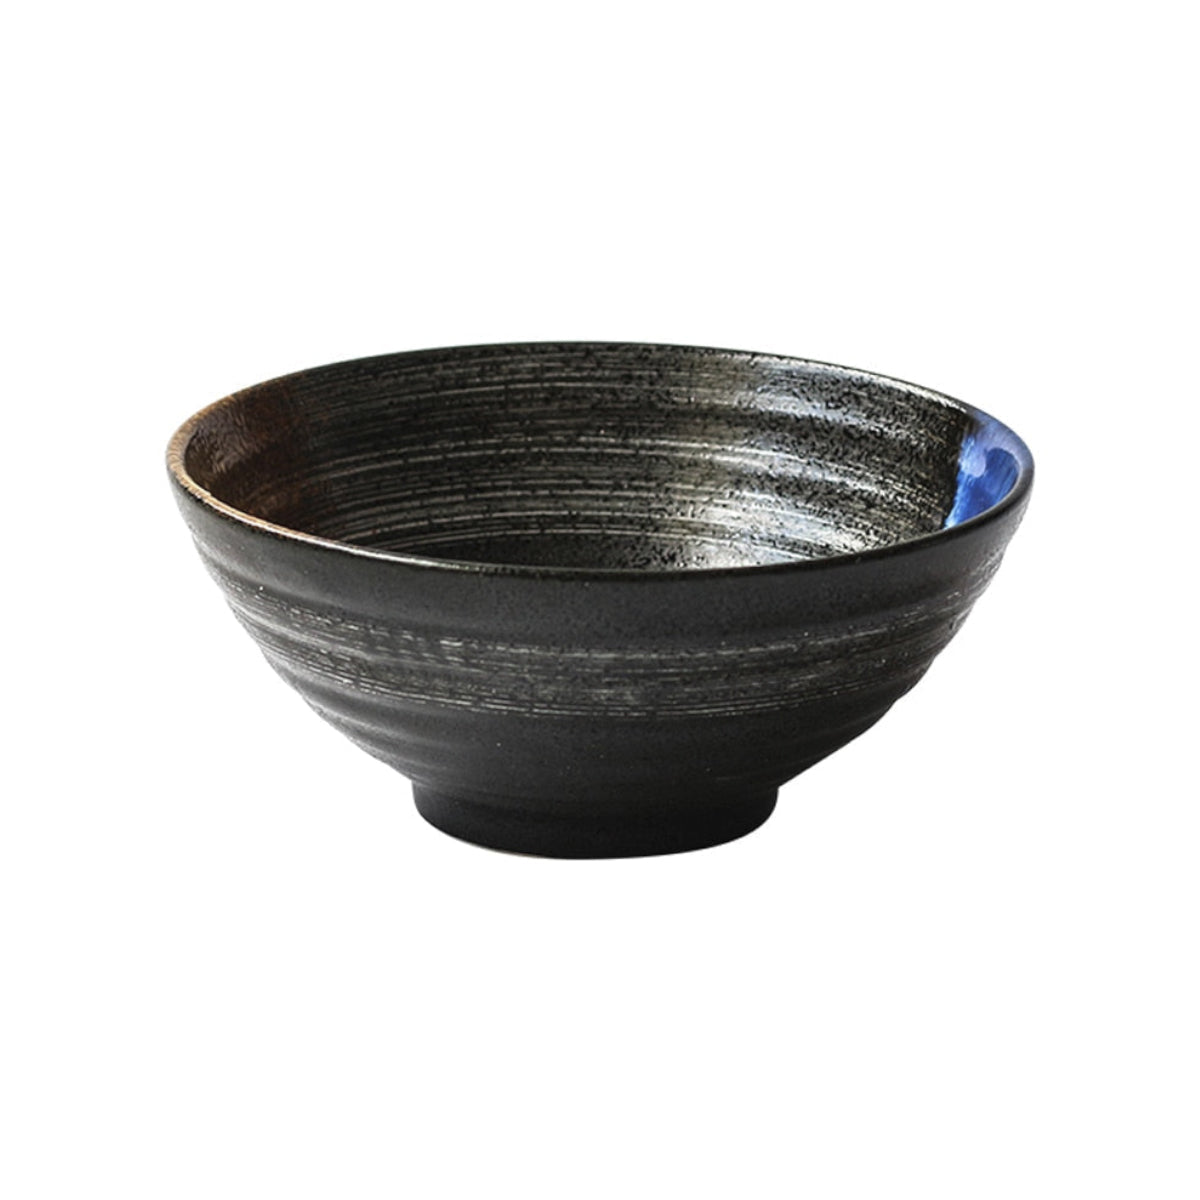 Large 7.5 inch Ceramic Soup Bowl